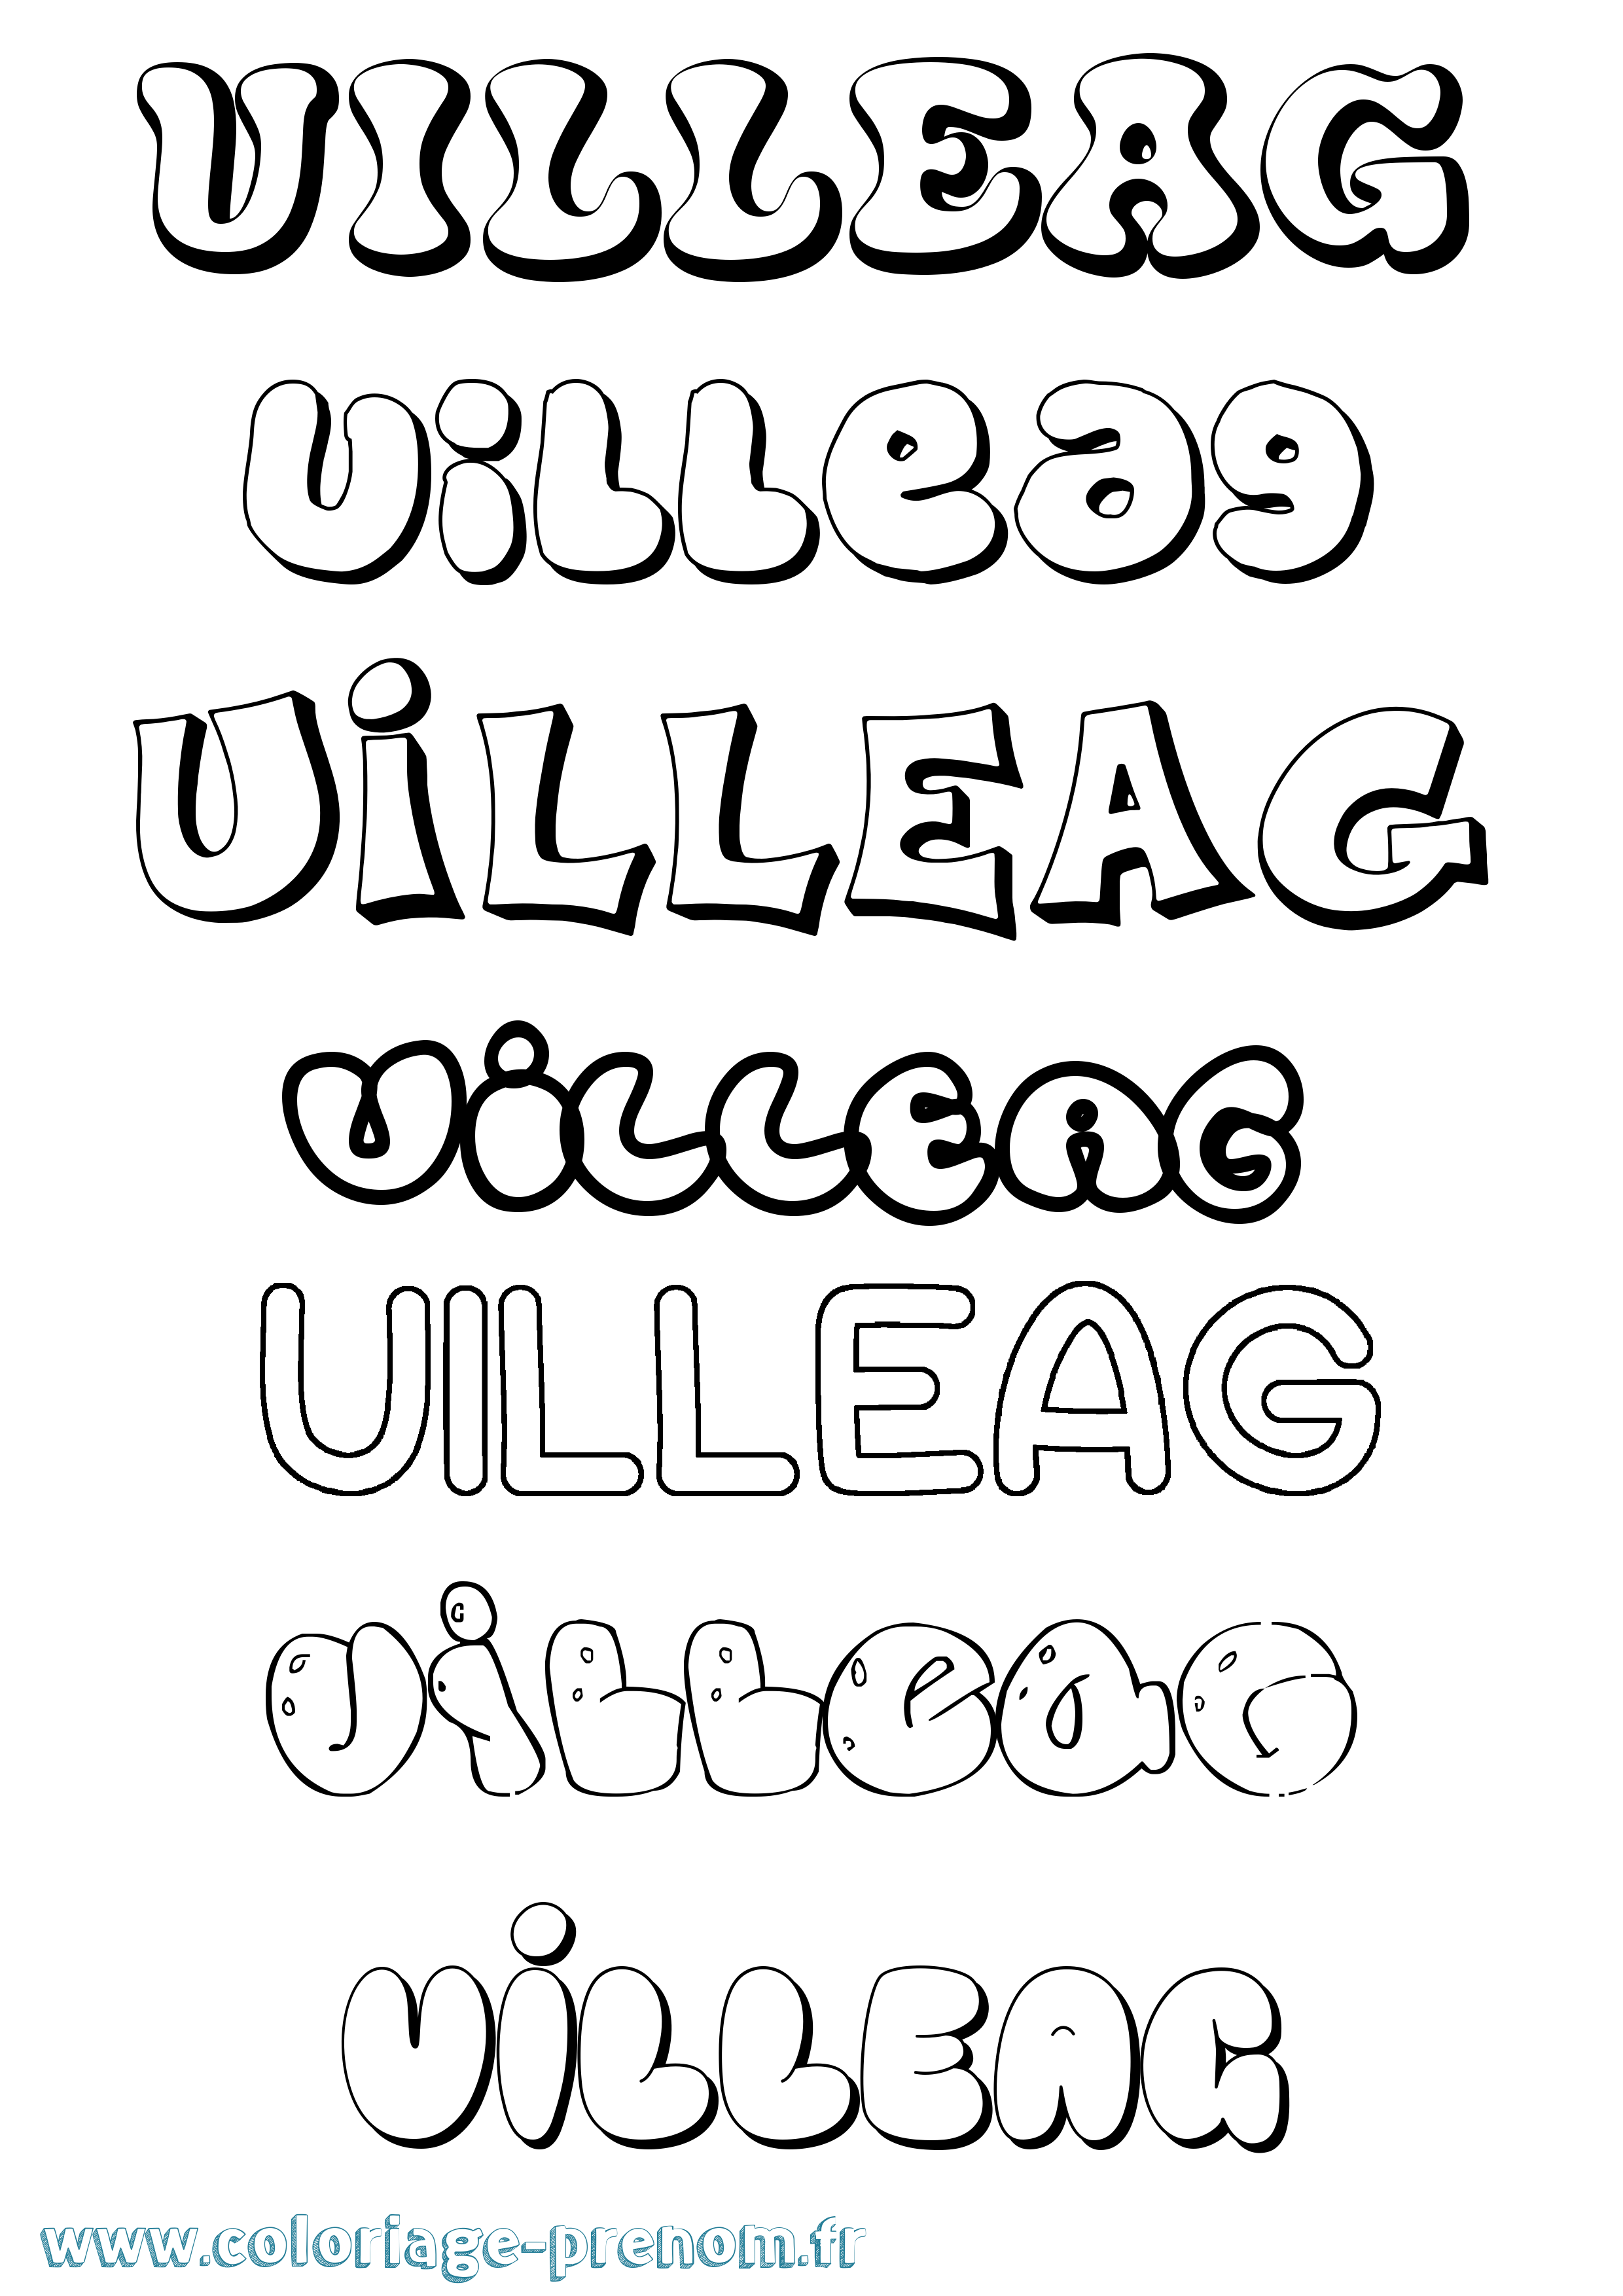 Coloriage prénom Uilleag Bubble